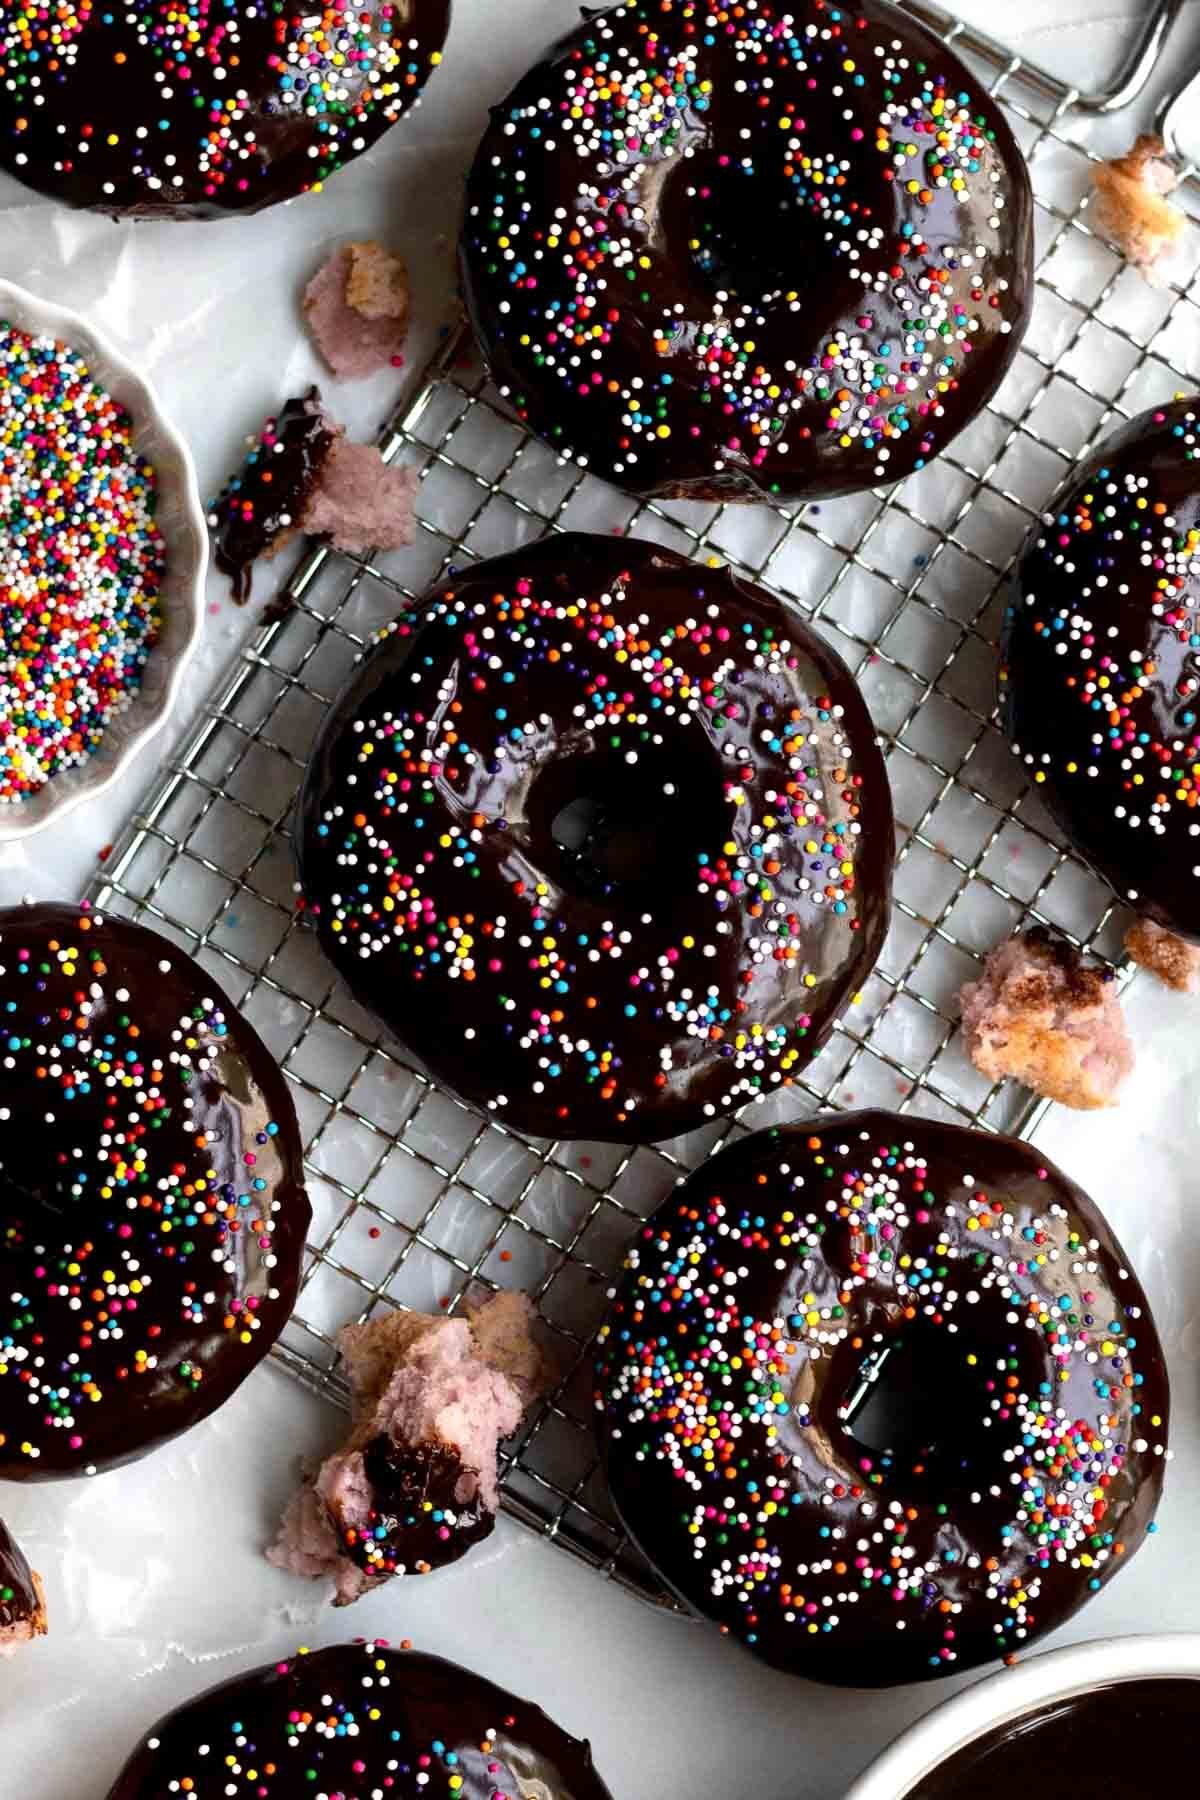 Rainbow nonpareils dot chocolate ganache covered donuts.